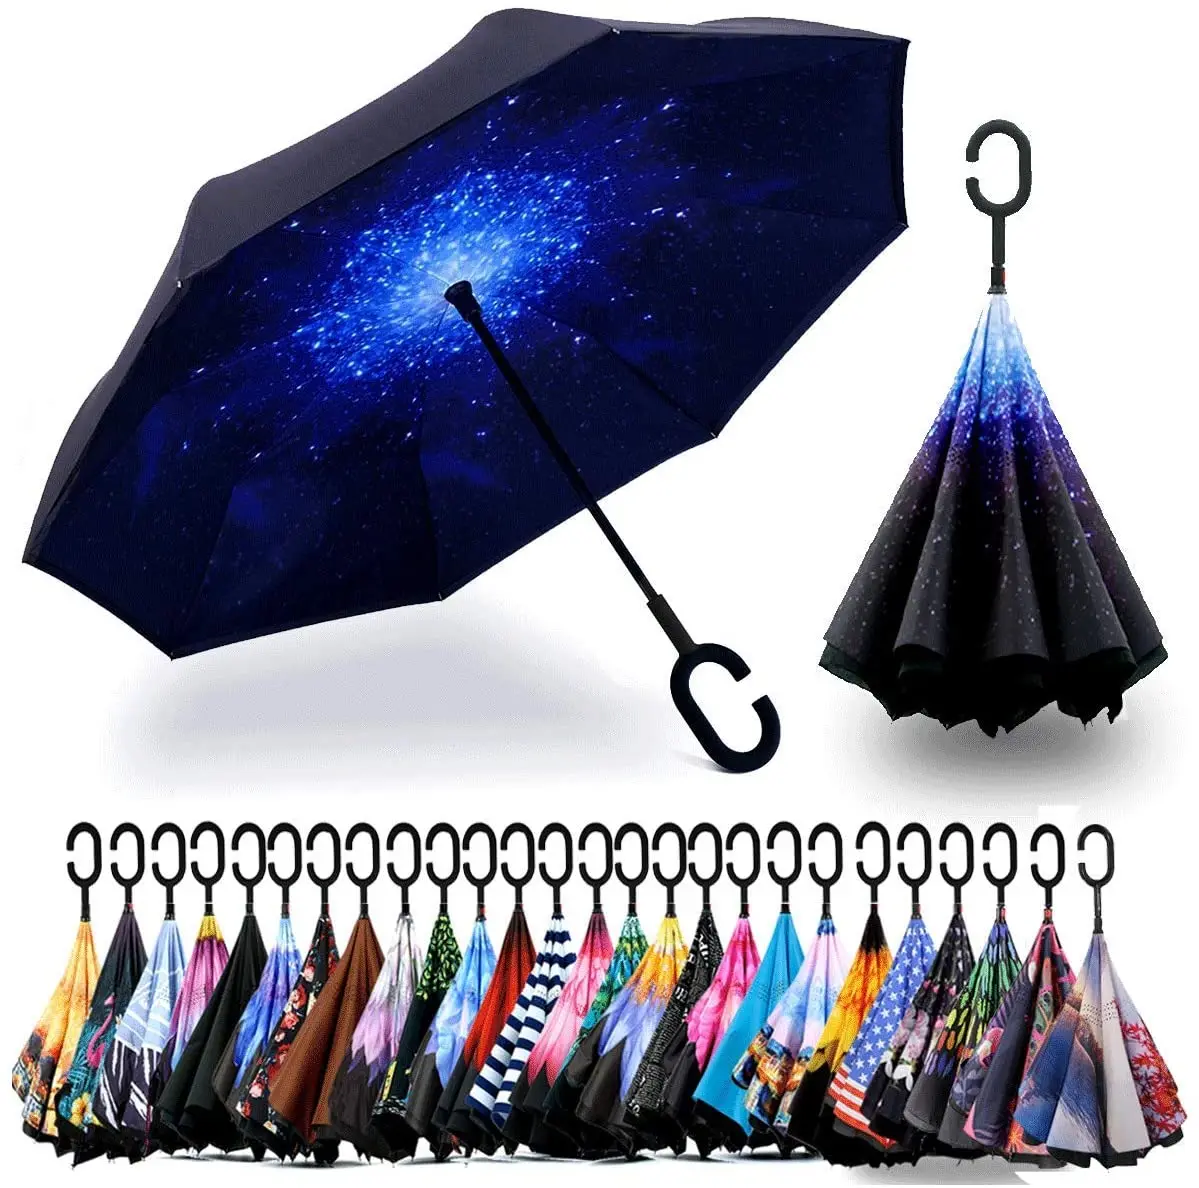 

New Windproof Travel inverse Wind Resistant Umbrella fashion design inverted umbrella long Folding and Portable Purse Umbrellas, Pantone color